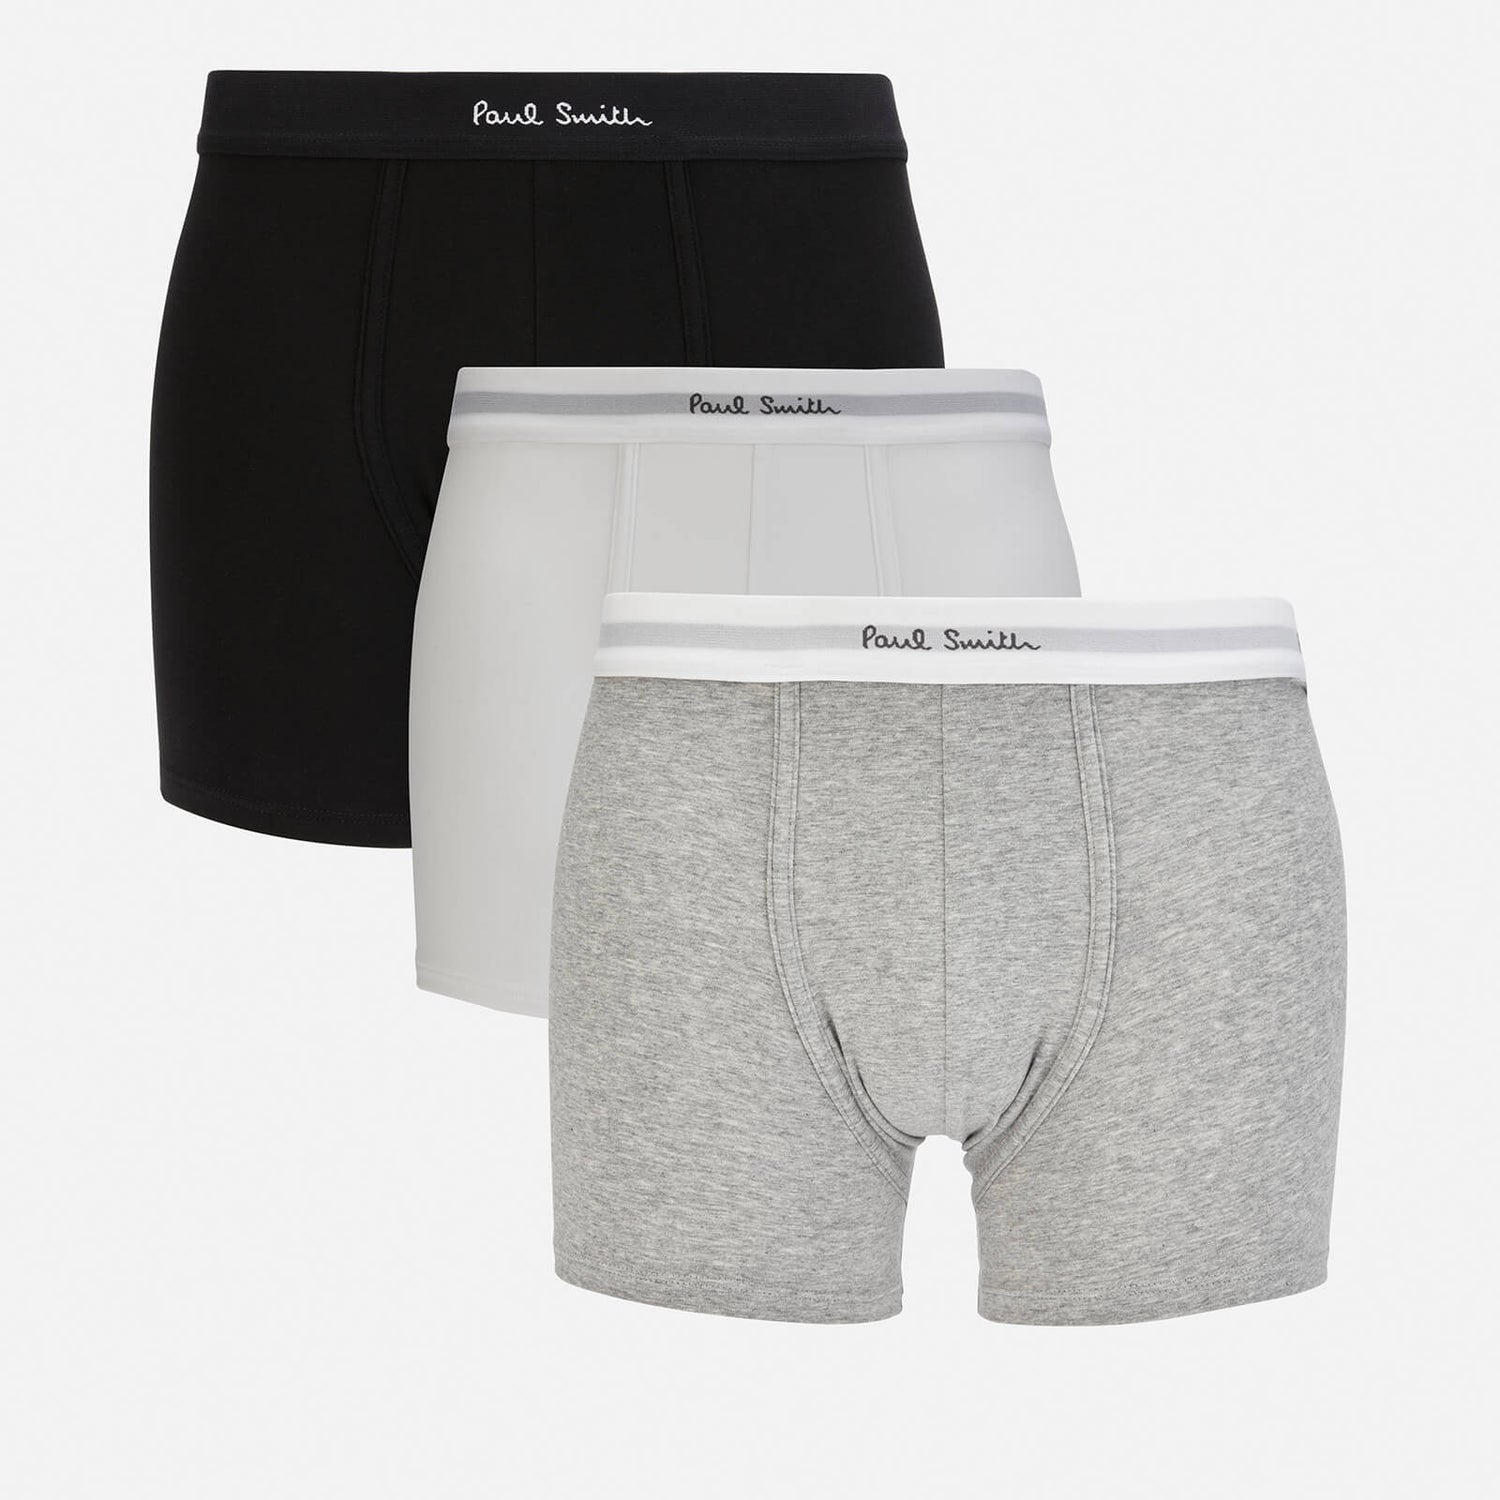 PS Paul Smith Men's 3-Pack Boxer Briefs - Black/Grey/White - S